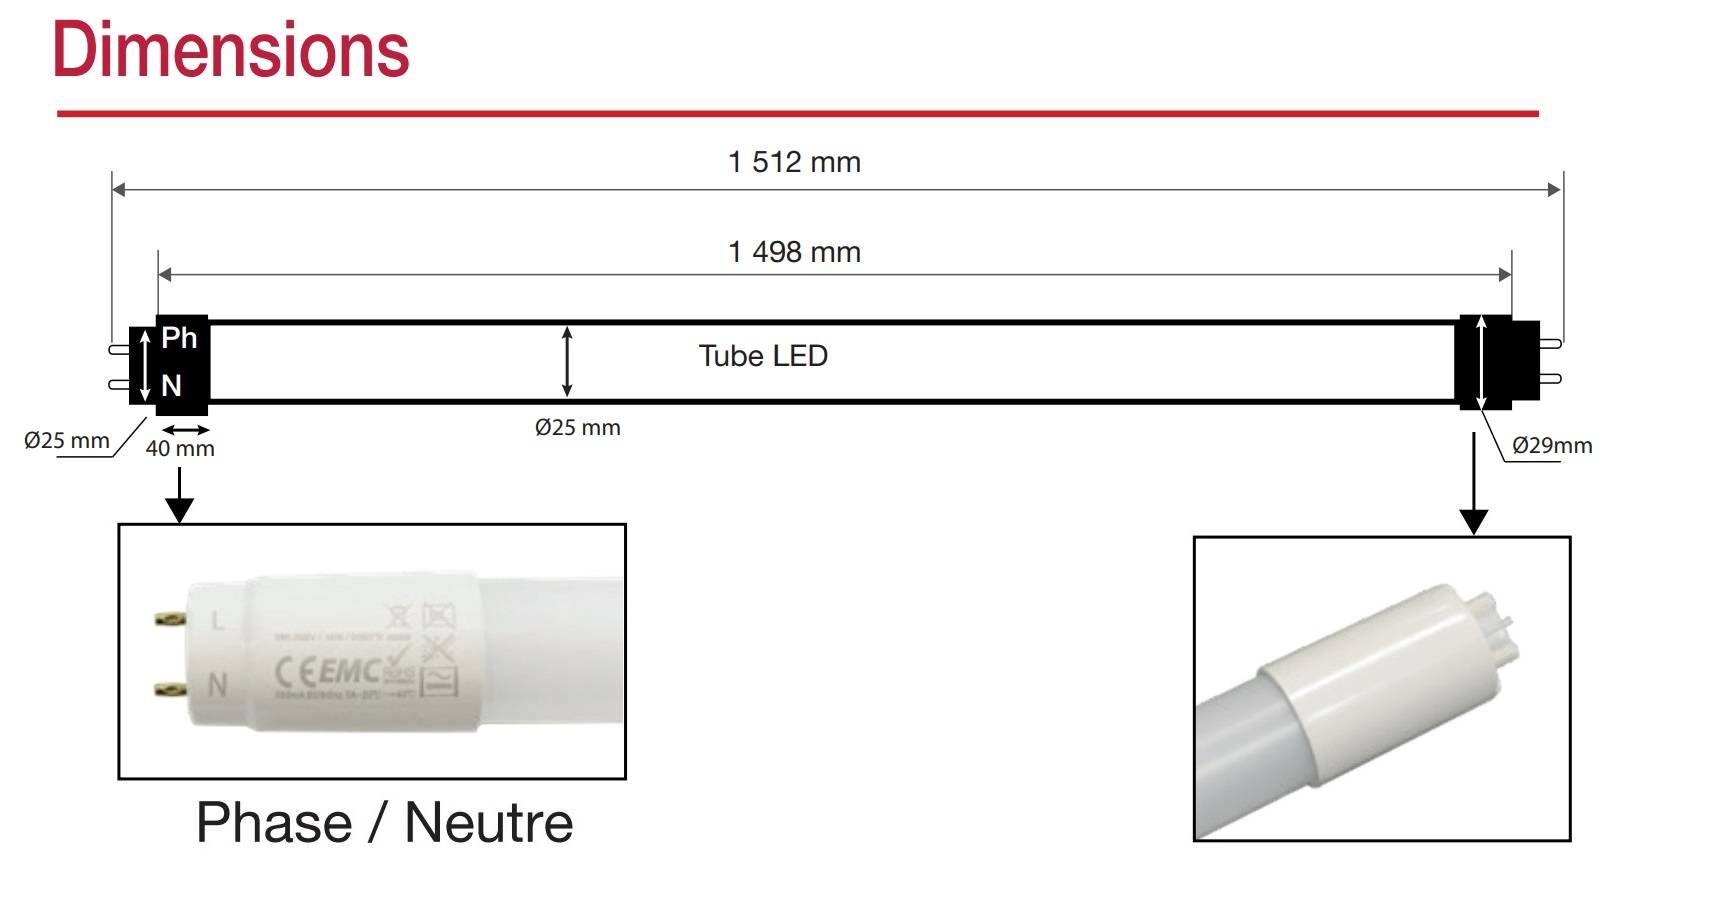 Tube néon Led T8 150cm blanc froid 6000K 24 W avec starter